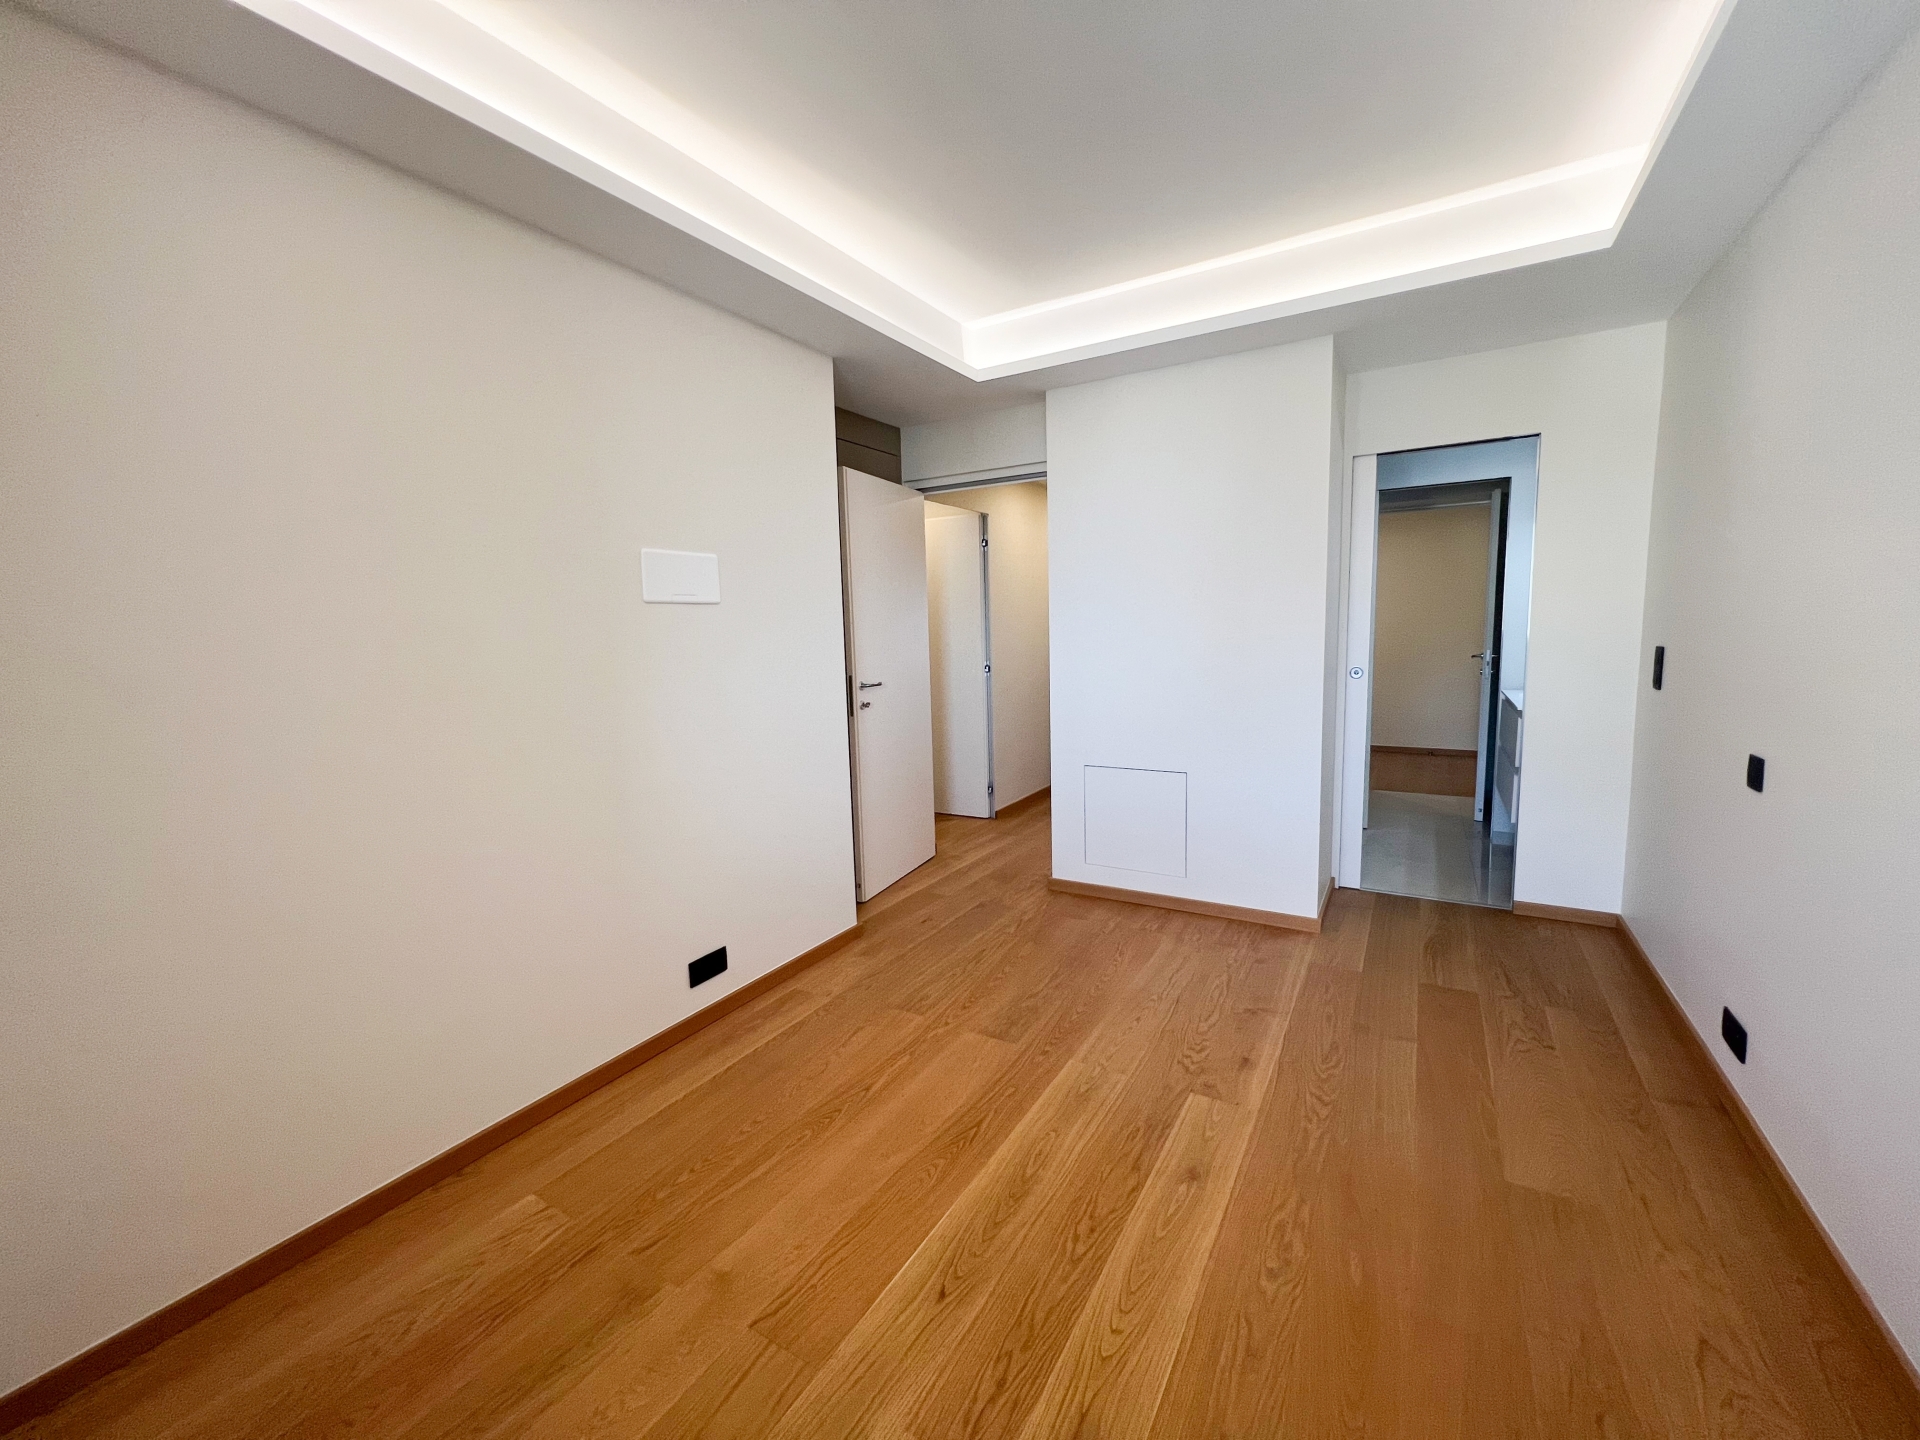 Dotta 3 rooms apartment for sale - PARK PALACE - Monte-Carlo - Monaco - img4